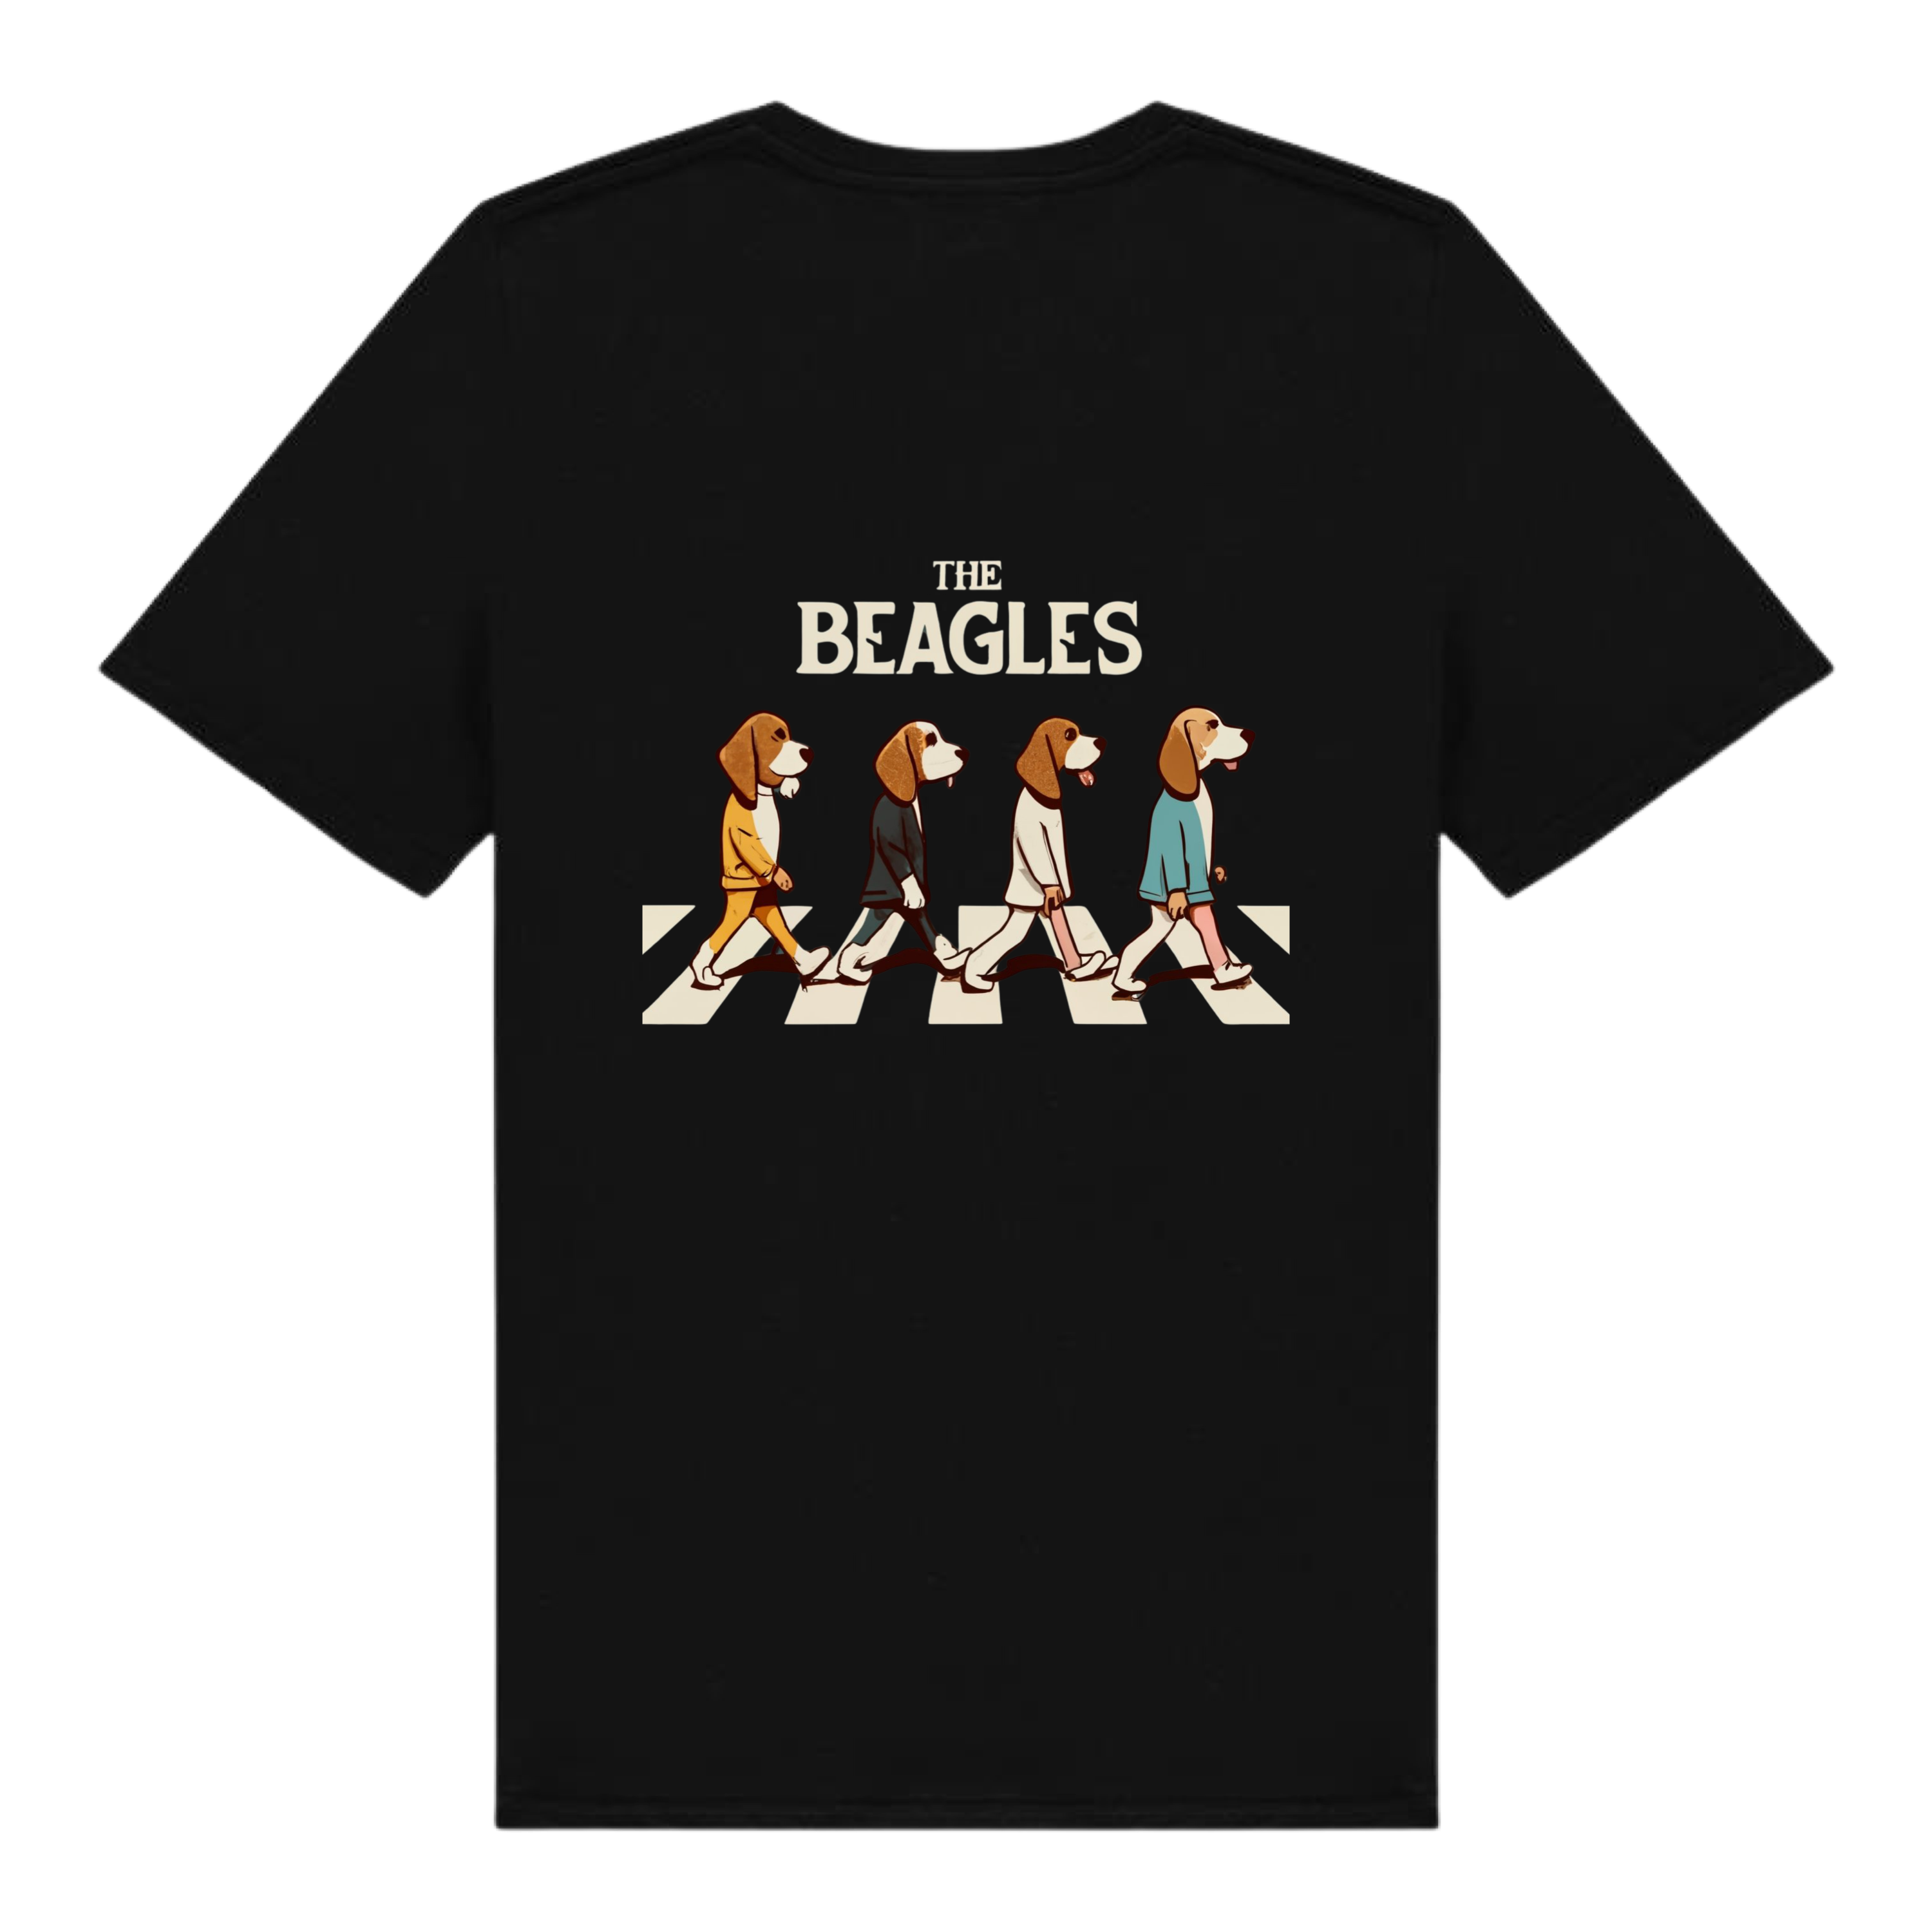 The Beatles Beagles 3 Mock T-Shirt